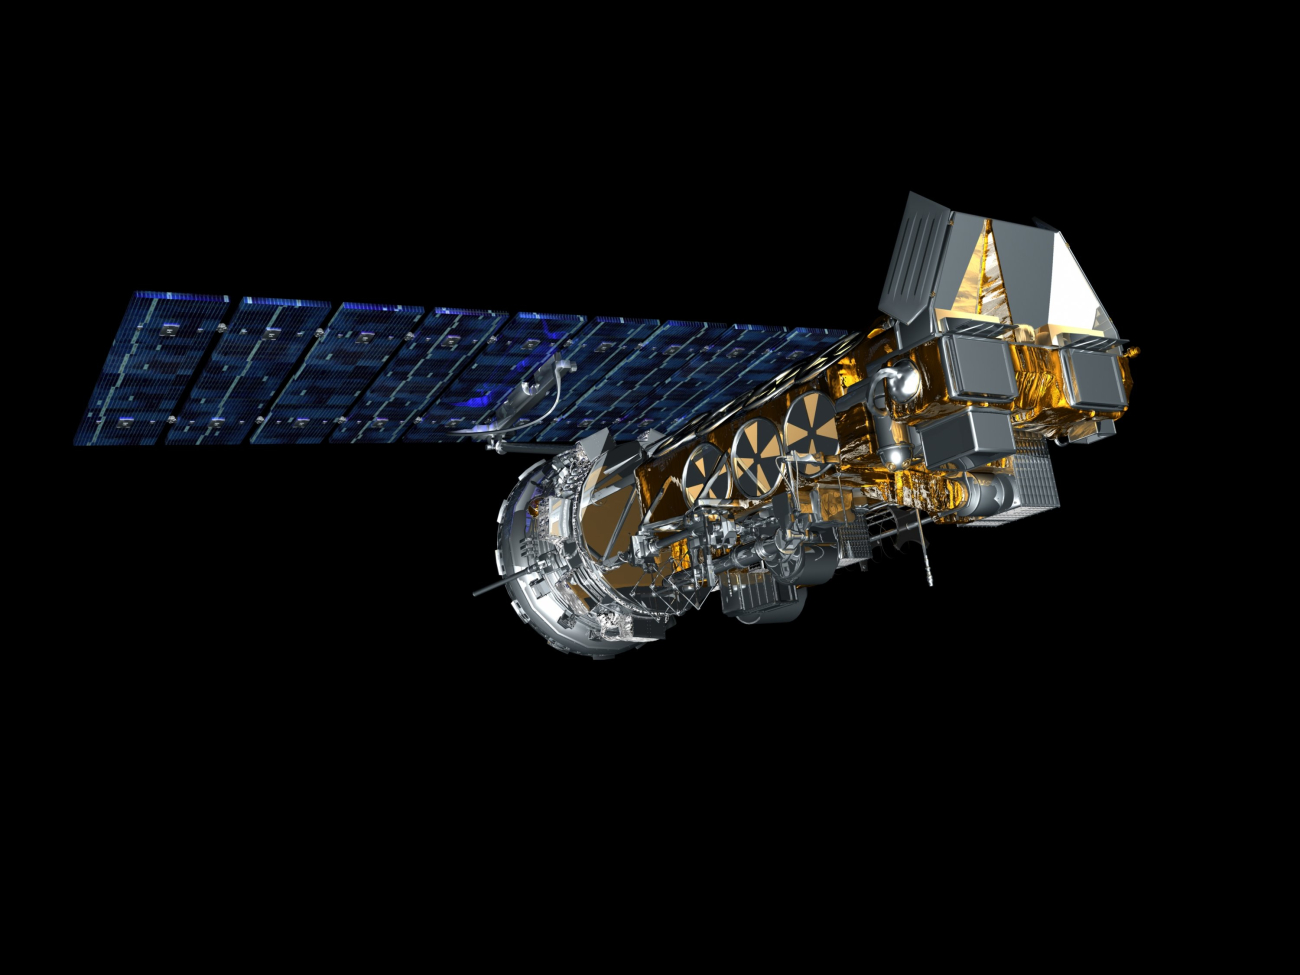 NOAA-19 satellite model